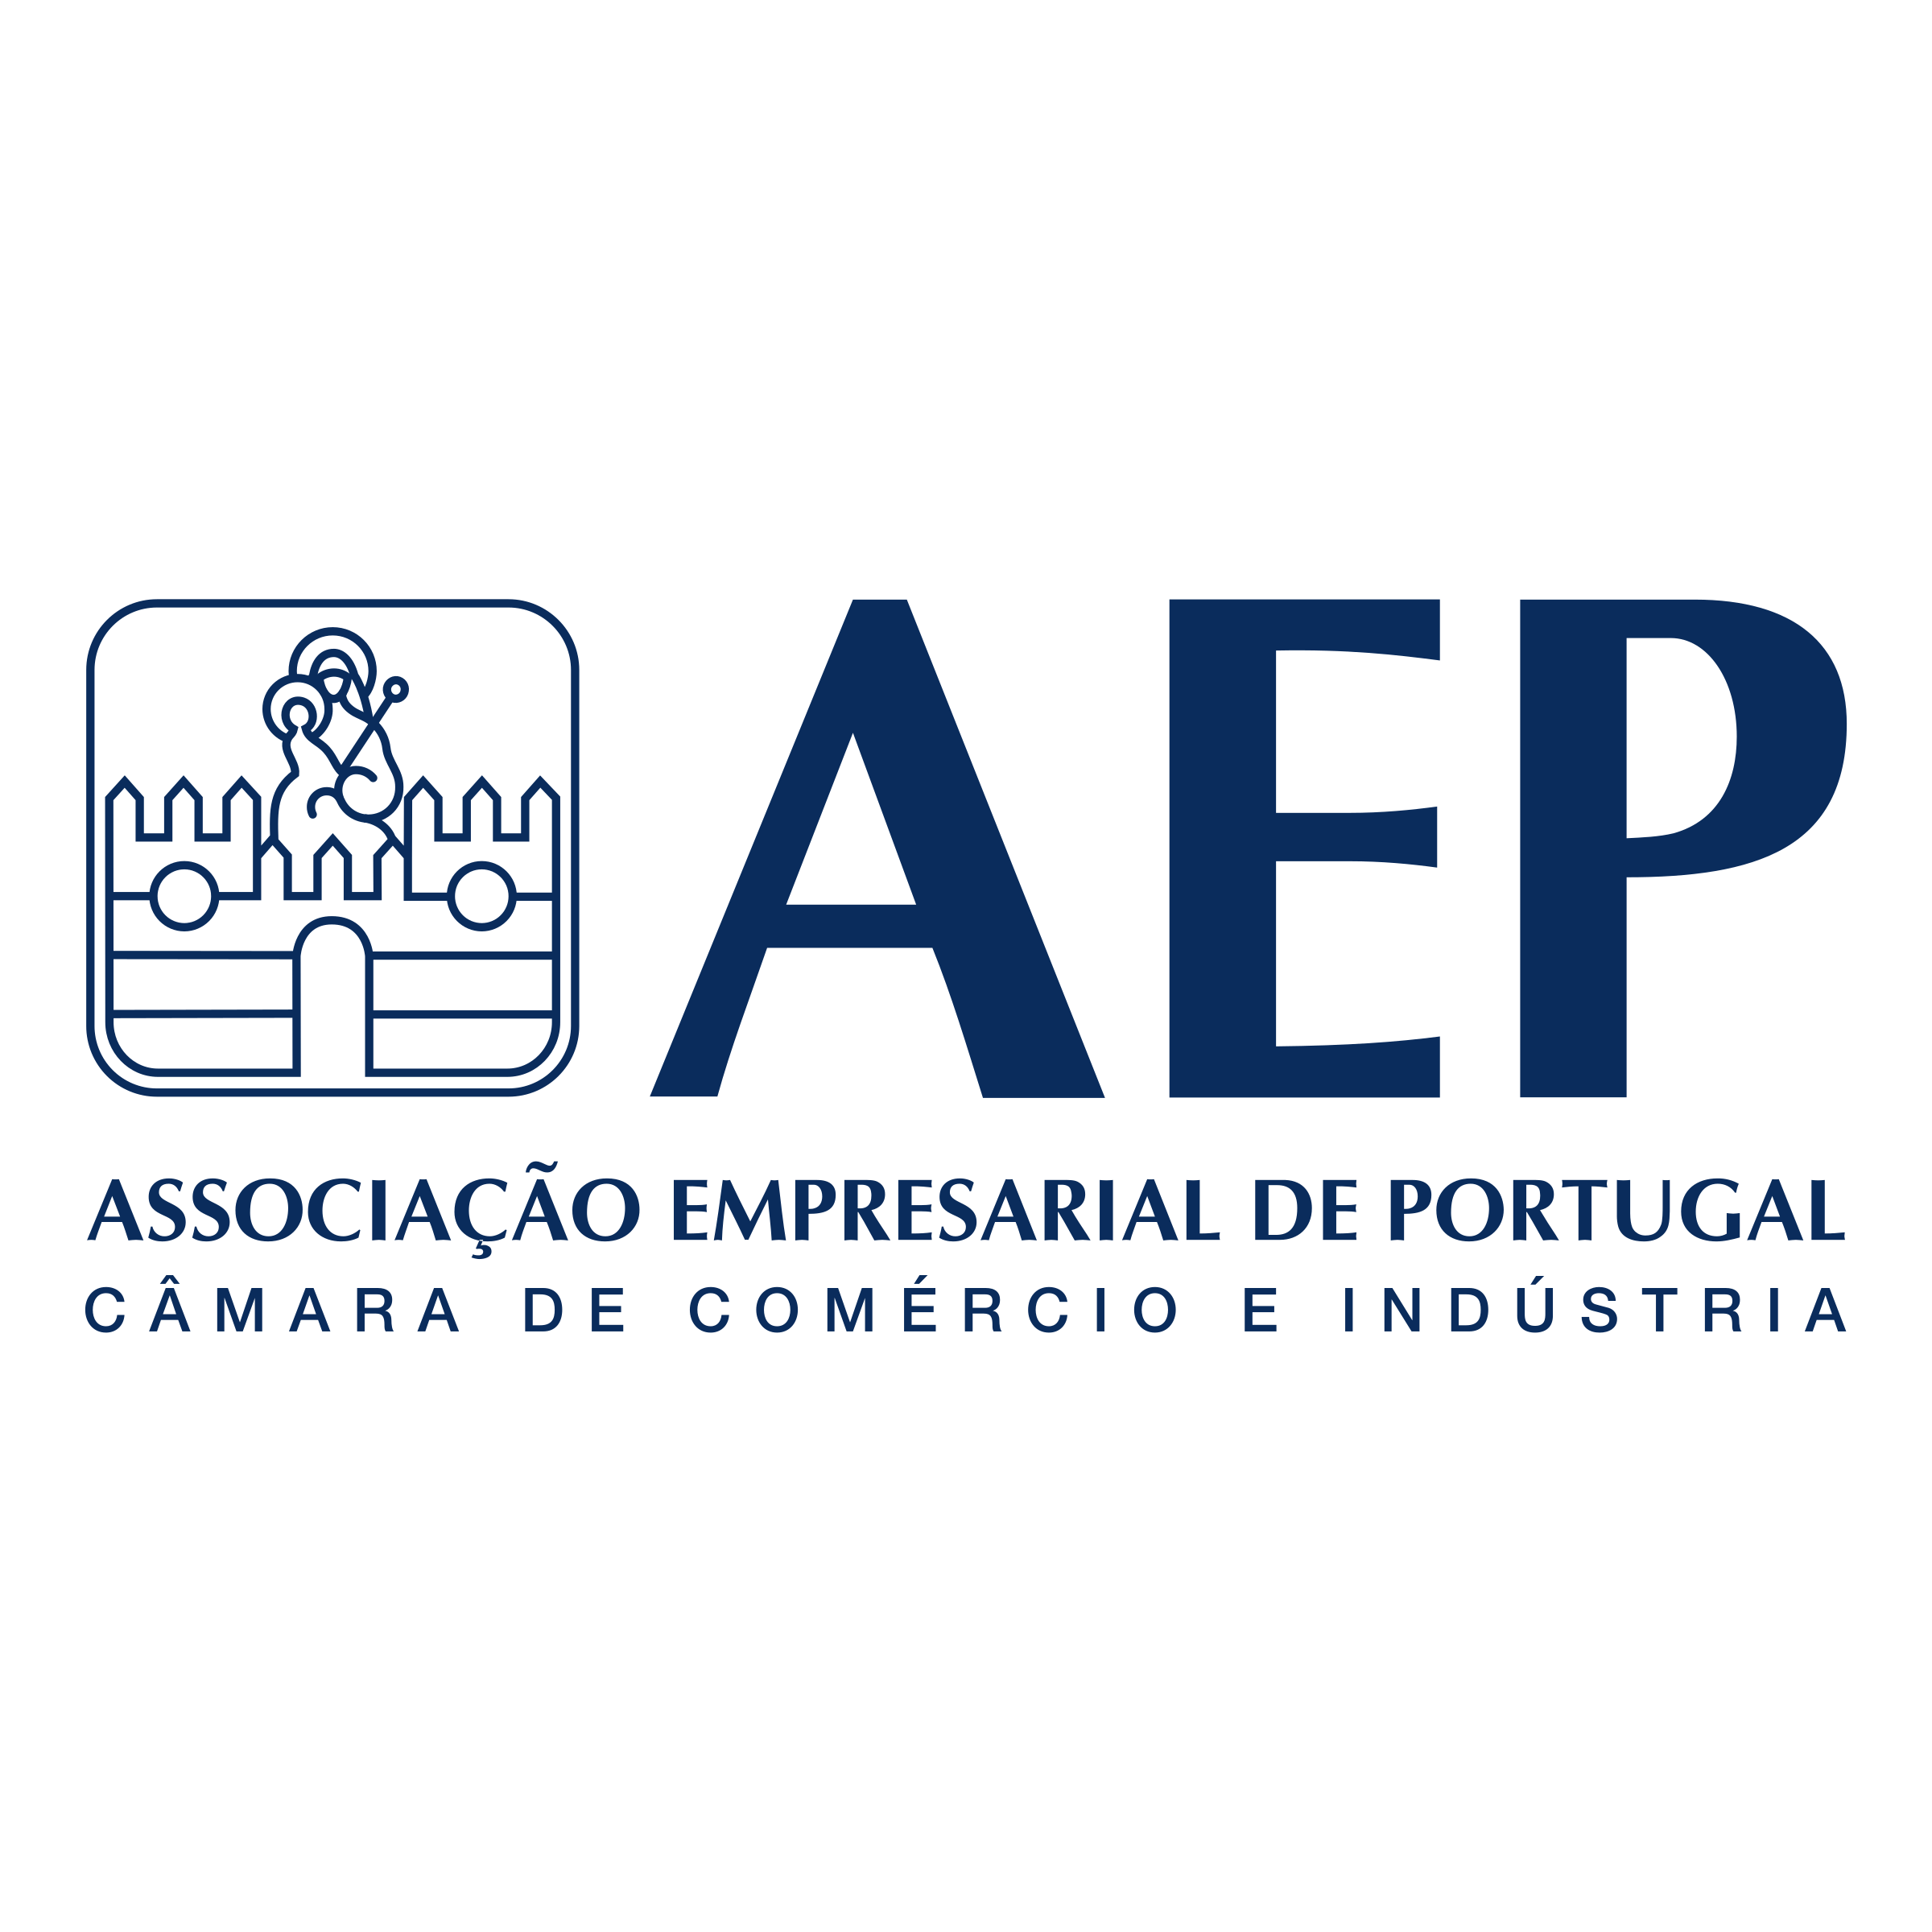 AEP Logo - AEP Logo PNG Transparent & SVG Vector - Freebie Supply